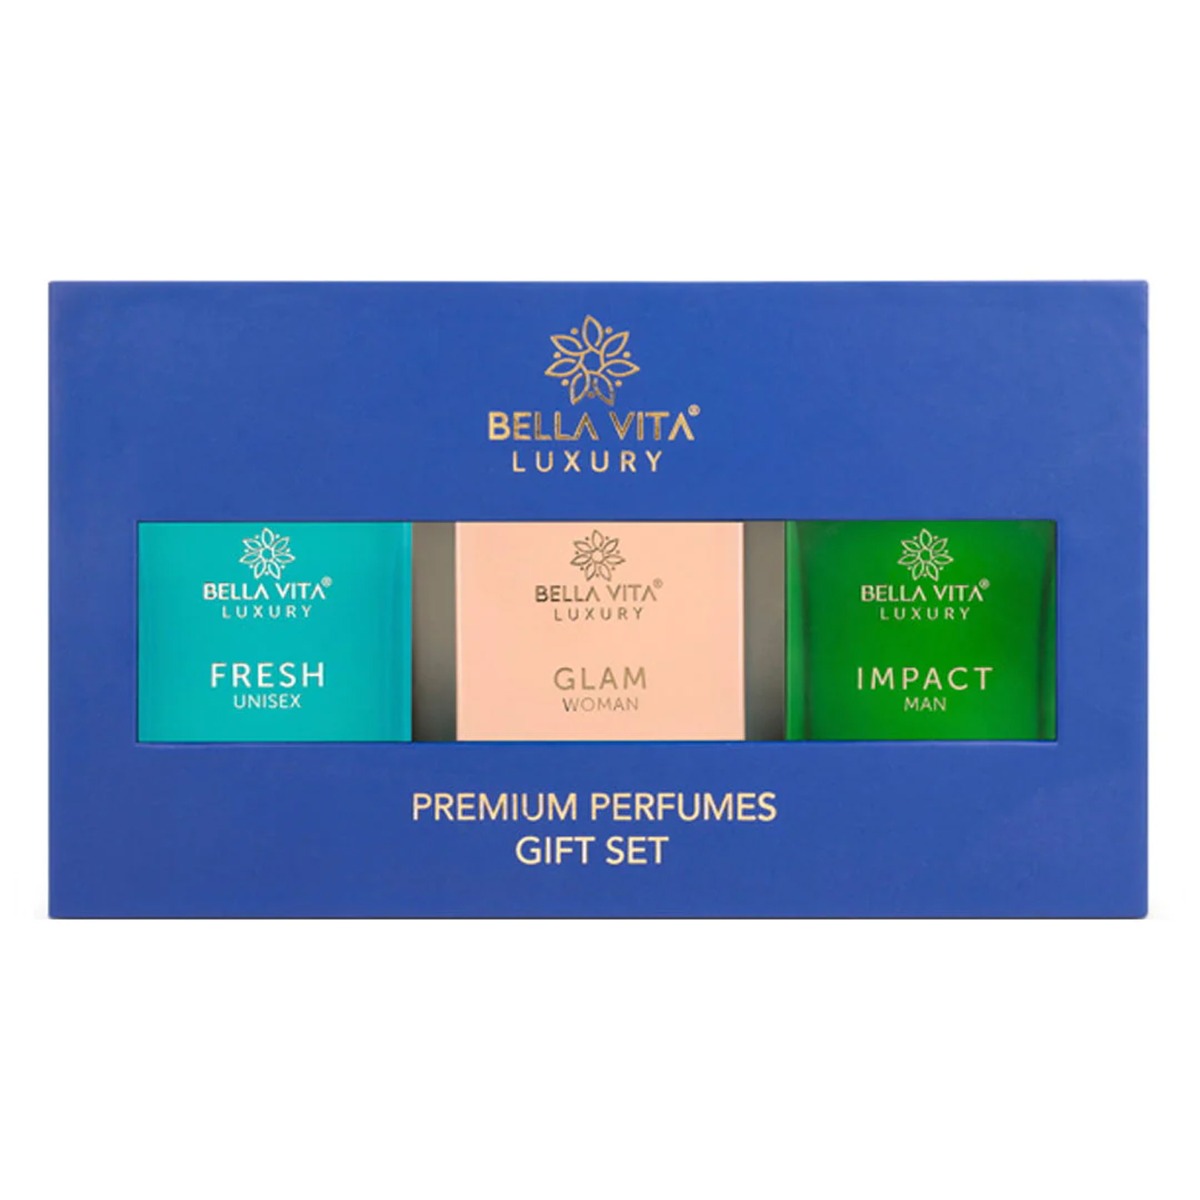 Bella Vita Gift Set Premium Parfum Impact Man, Glam Woman & Fresh Unisex, Pack Of 3, 1Pc